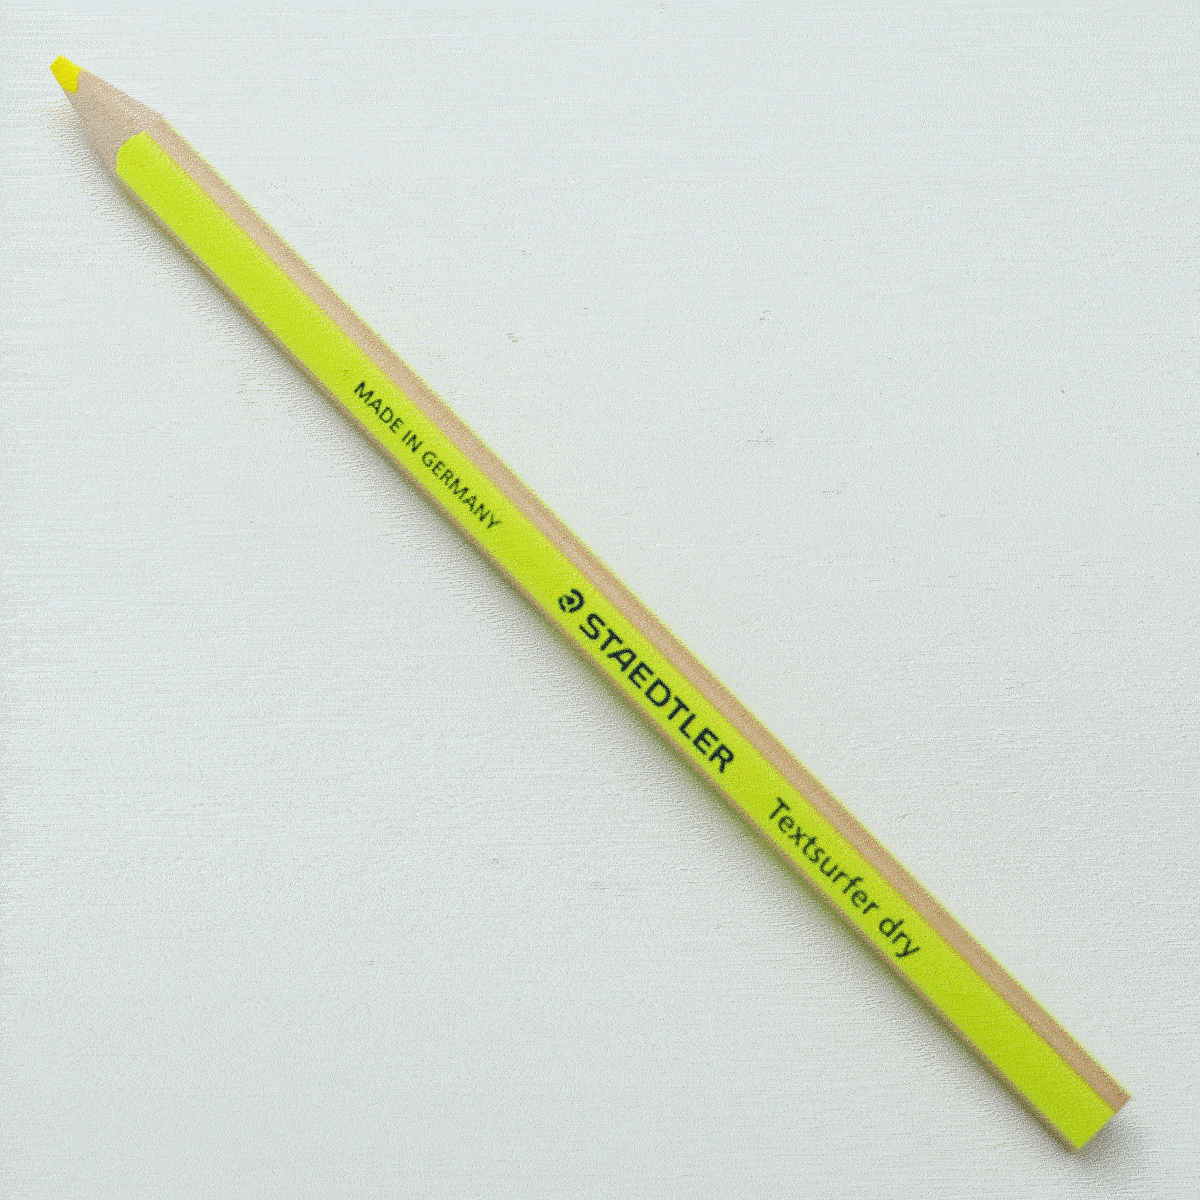 Staedtler 128 64-1 Yellow Color Highlighter Pencil SKU 24398